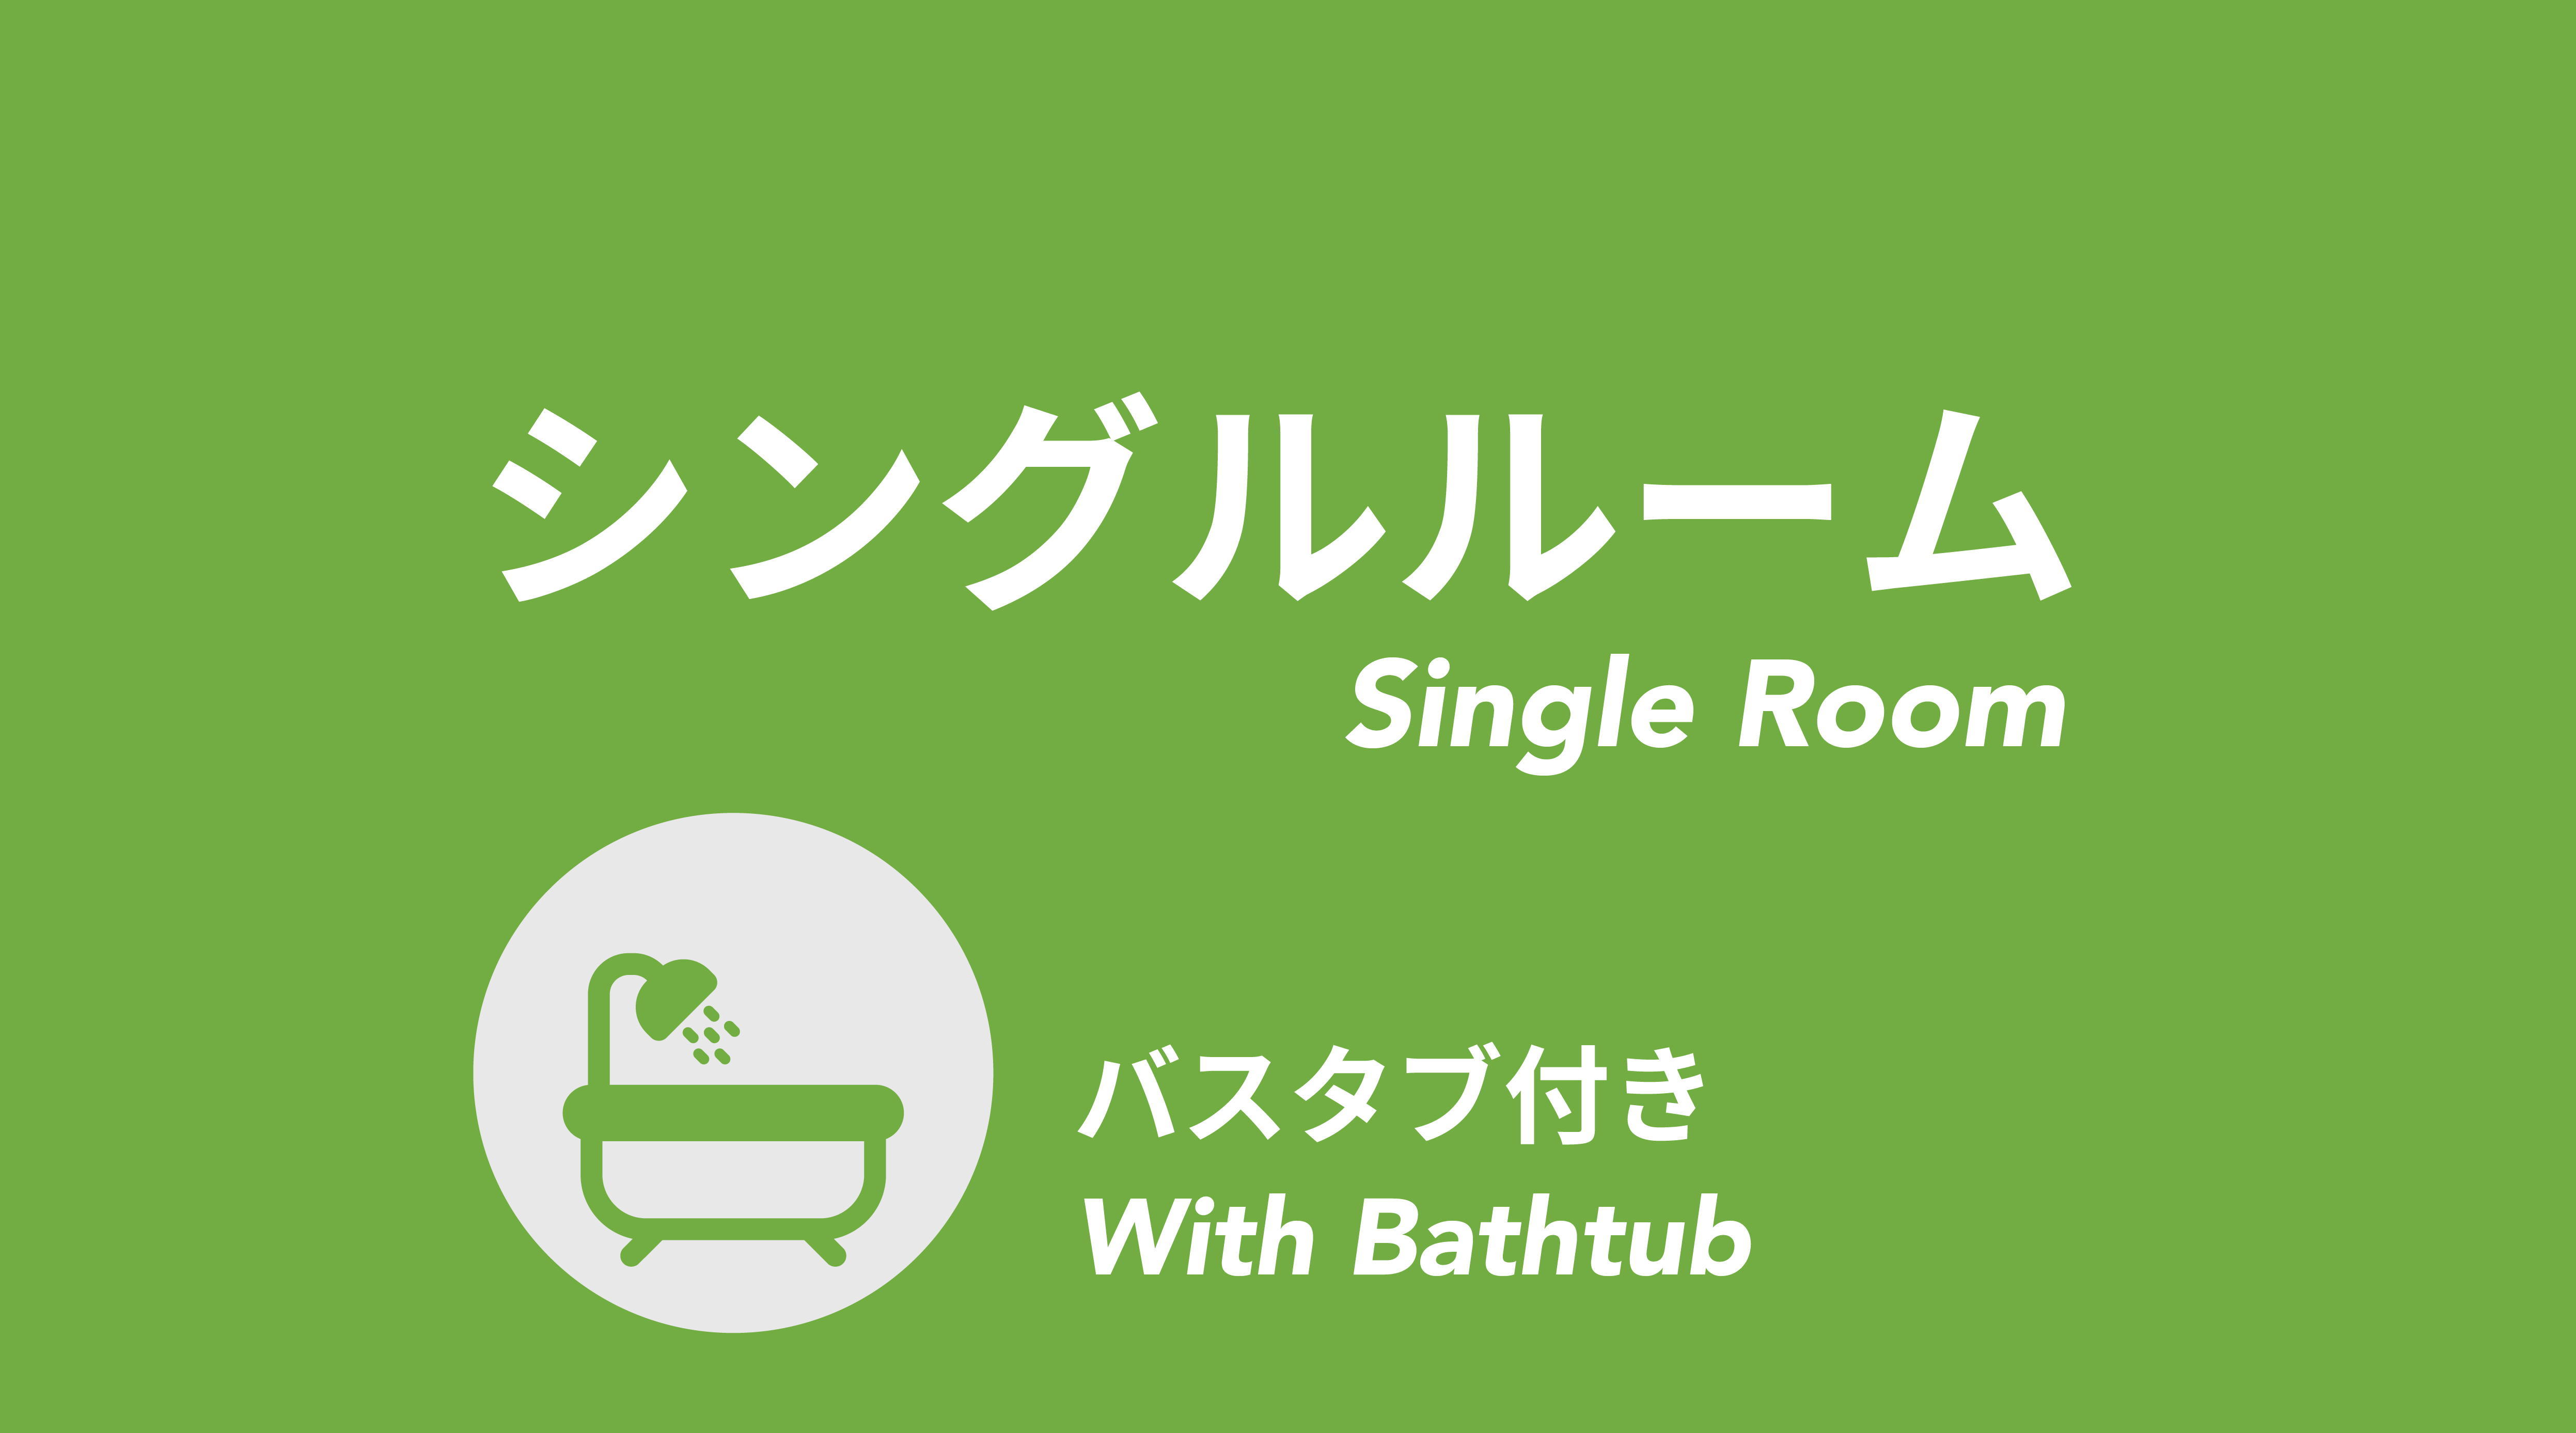 Single Room with Bathtub